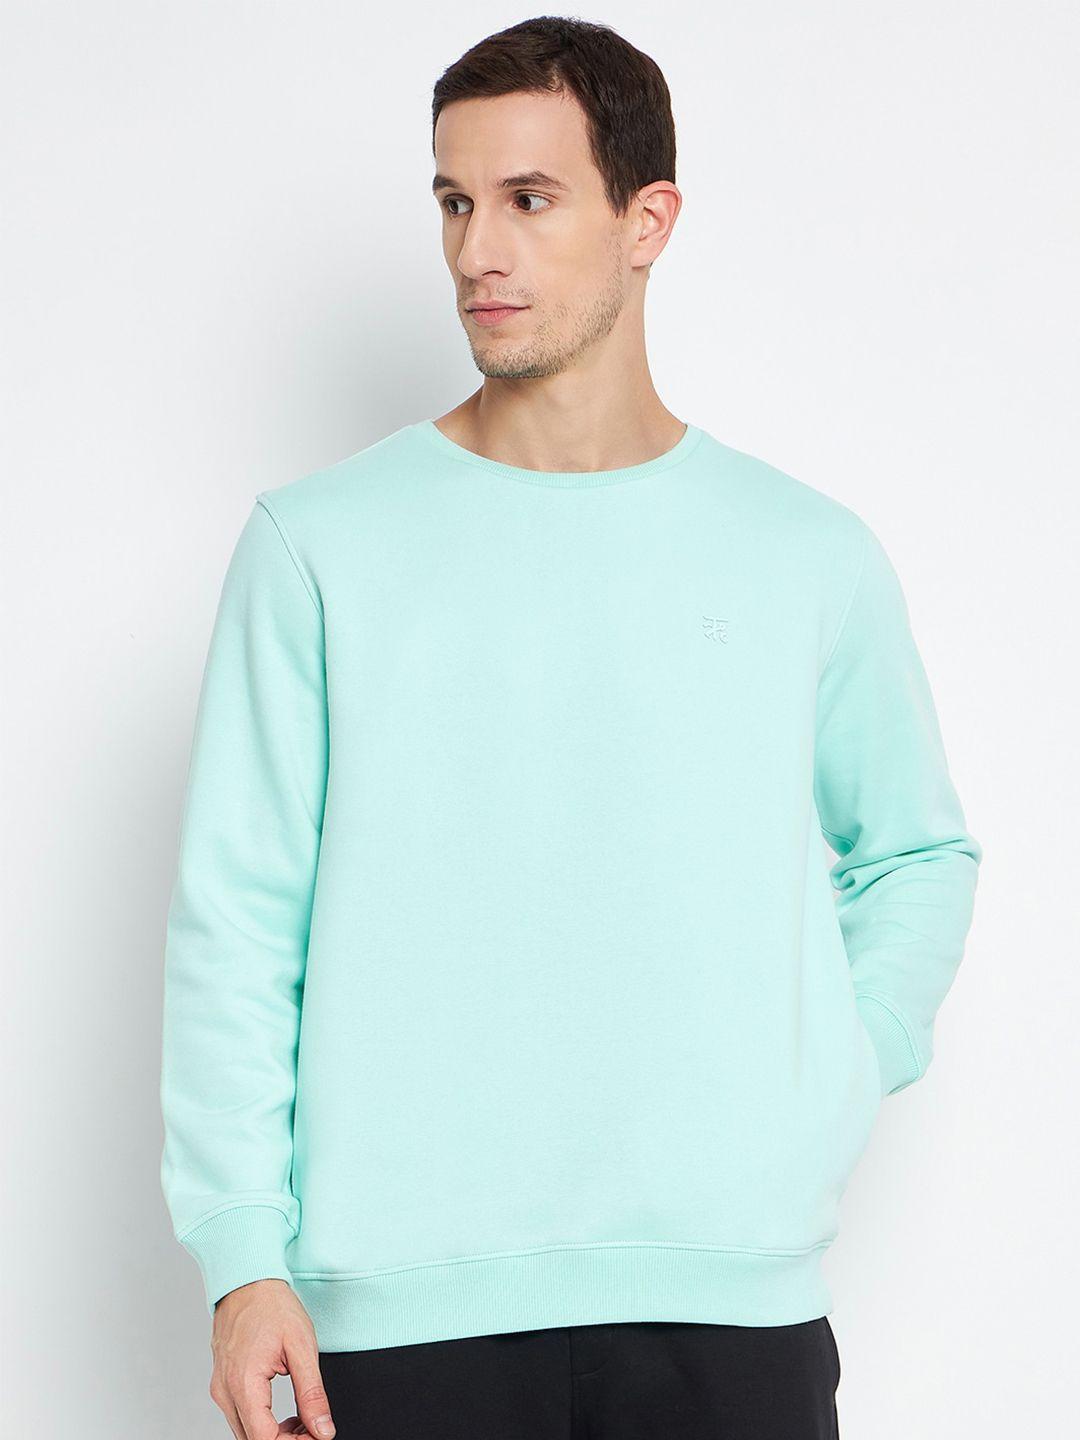 edrio round neck cotton sweatshirt